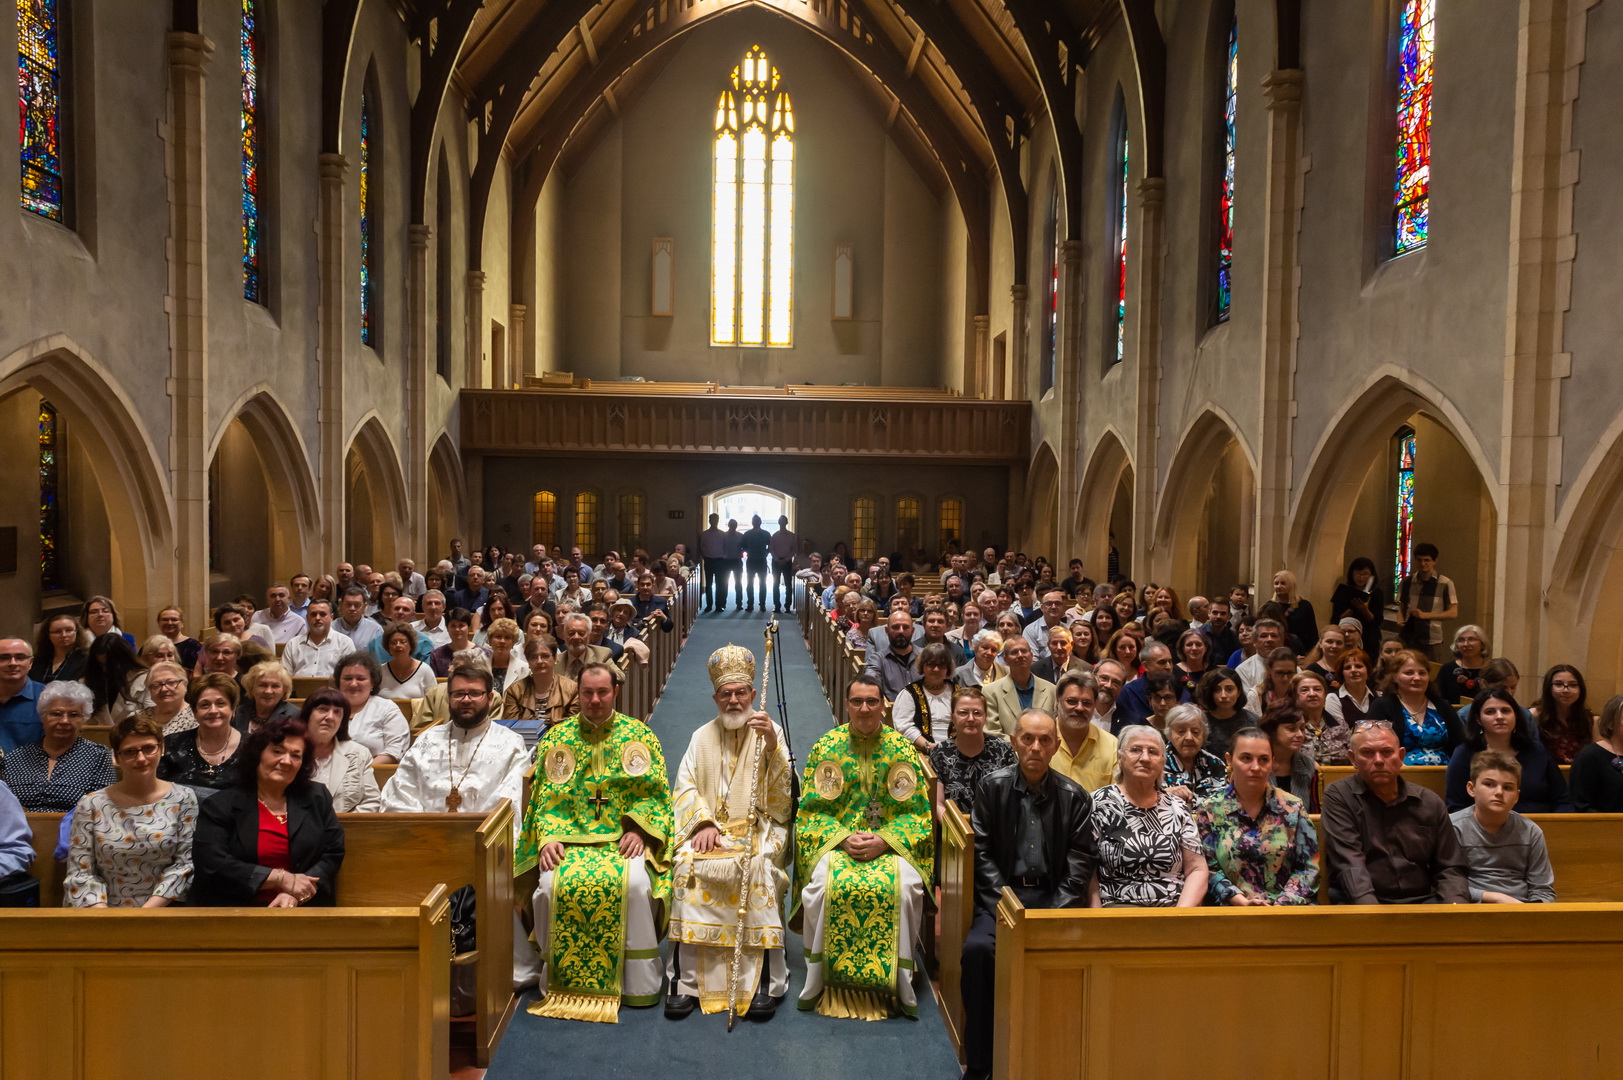 20th Anniversary of the Establishment of St. John the Evangelist Parish